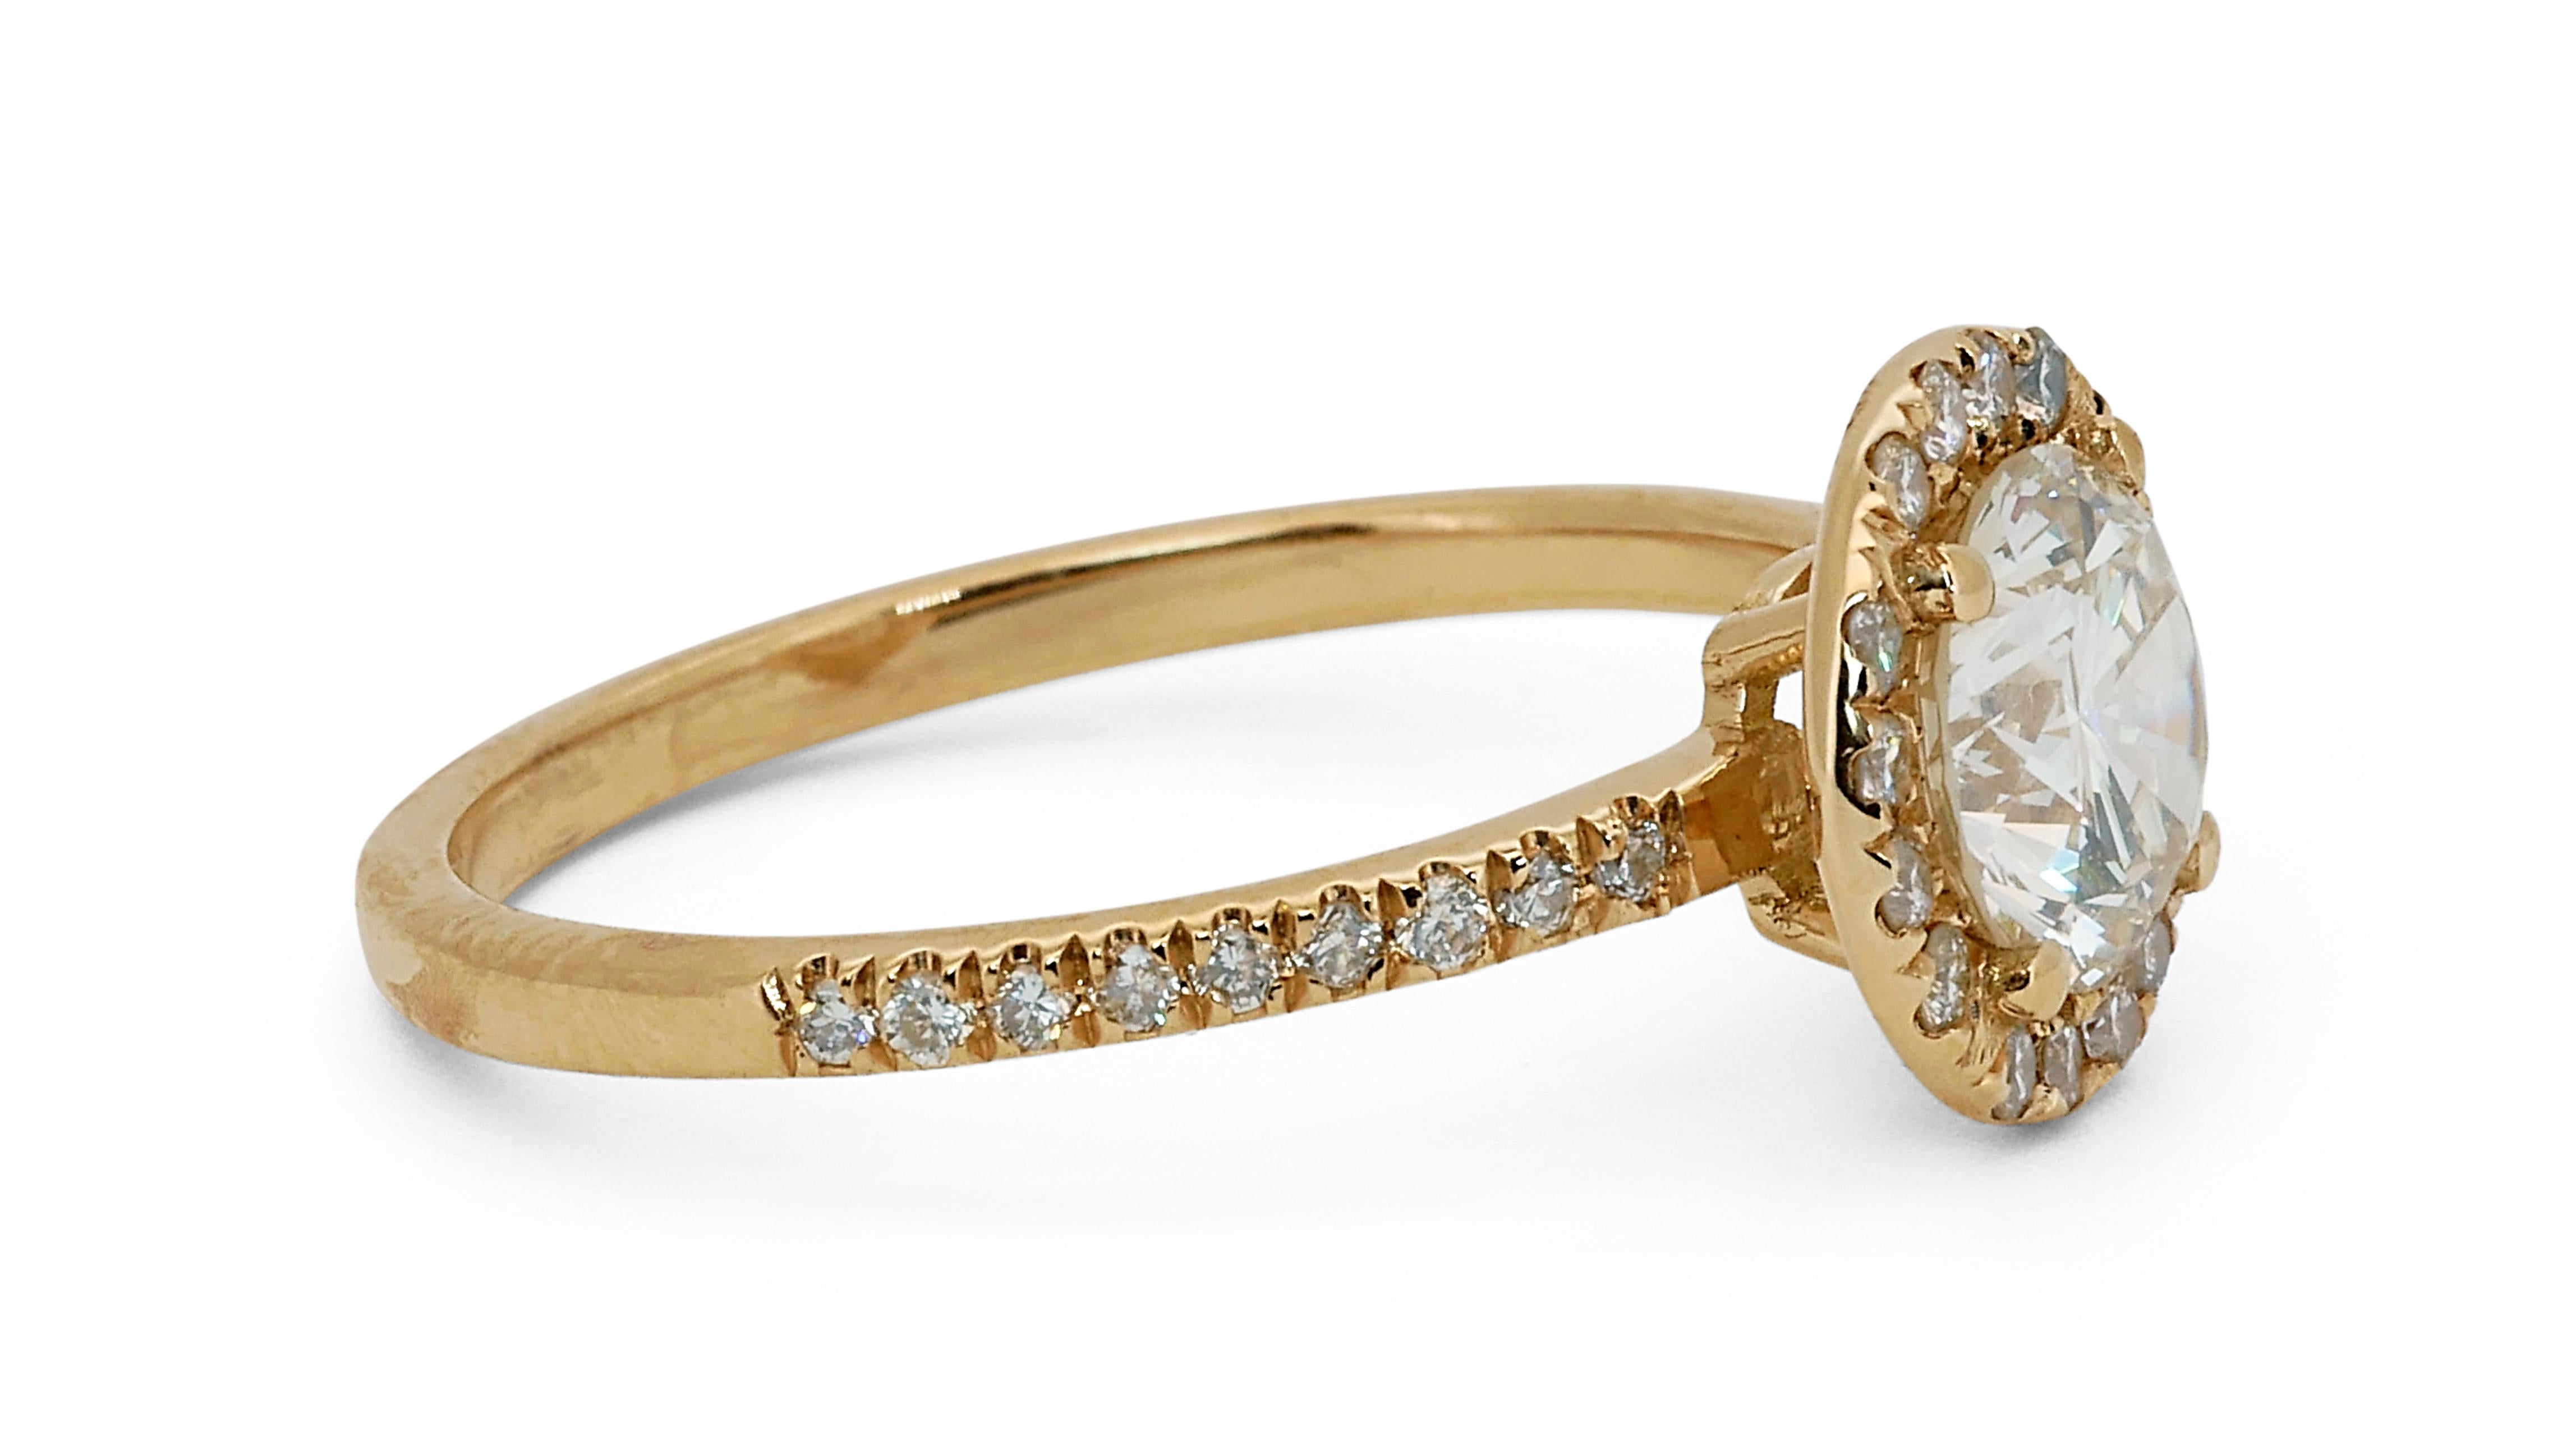 Stunning 18k Yellow Gold Halo Ring with 1.35 Natural Diamonds IGI Certificate 2